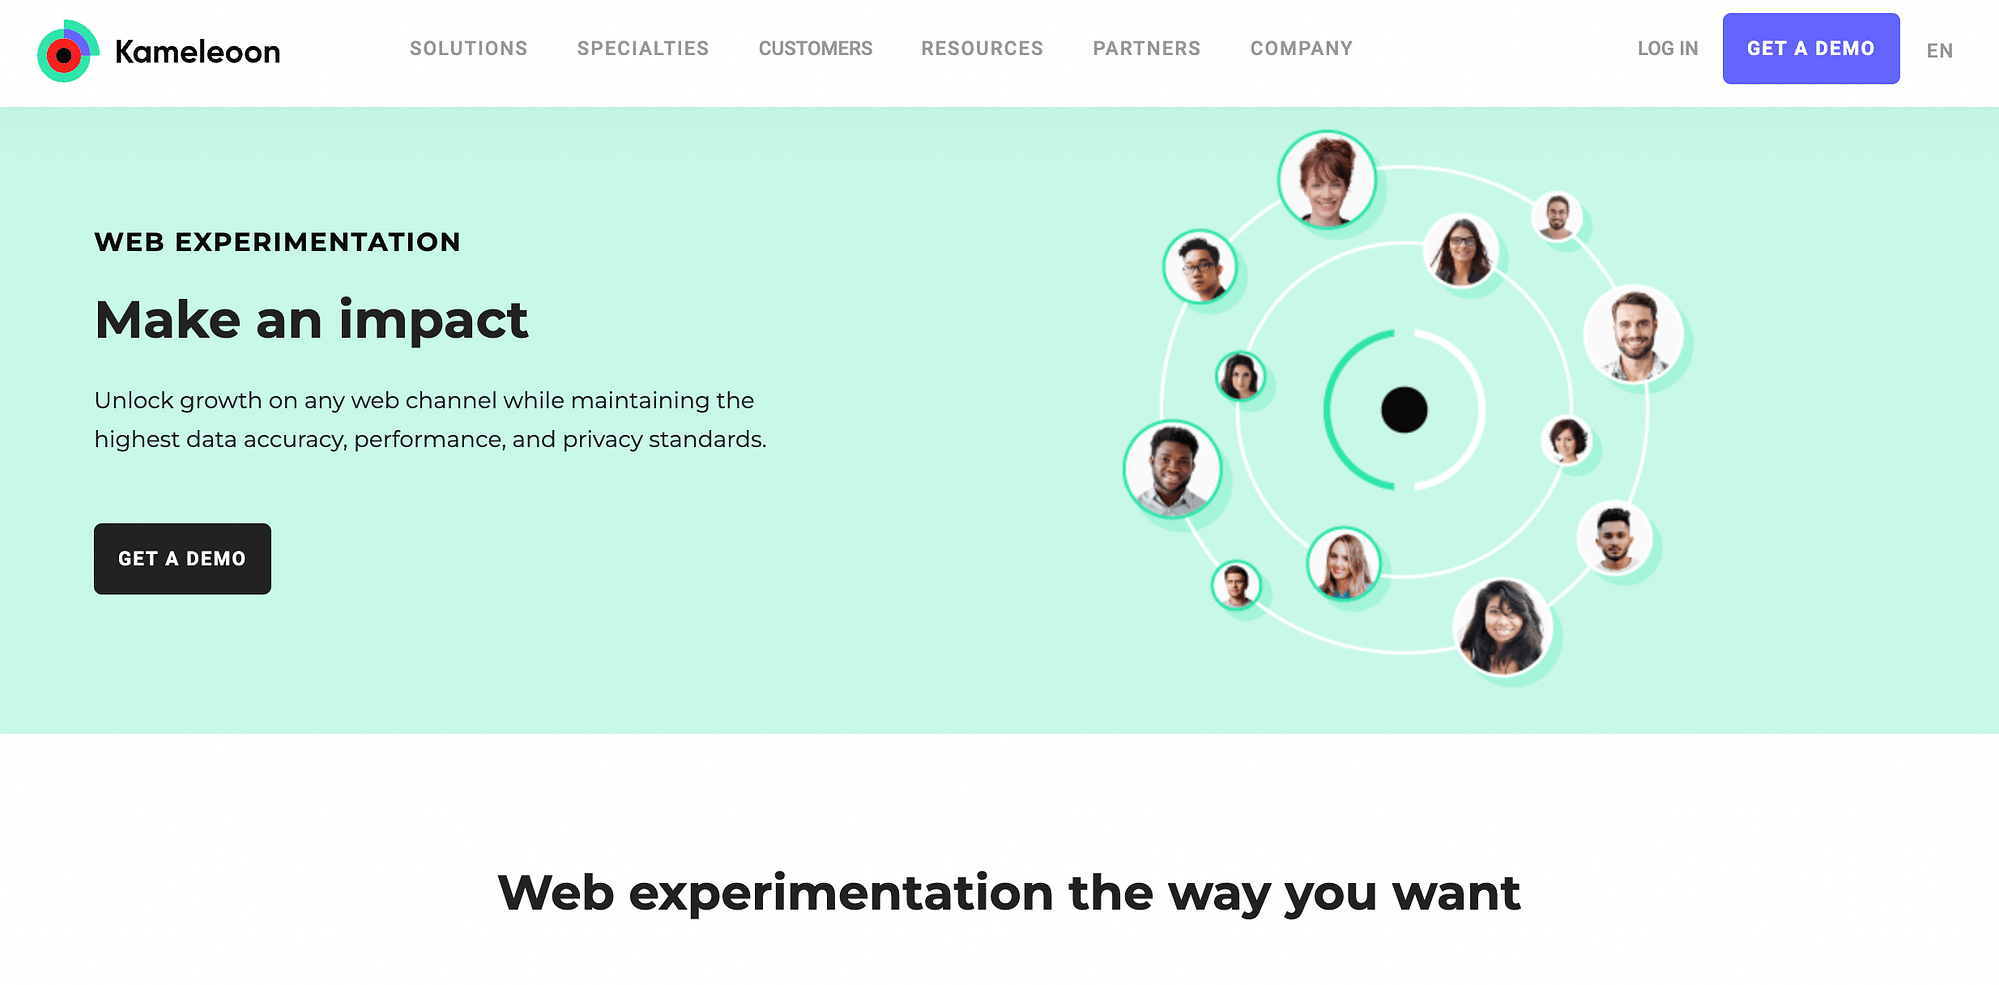 Kameleoon's Web Experimentation software